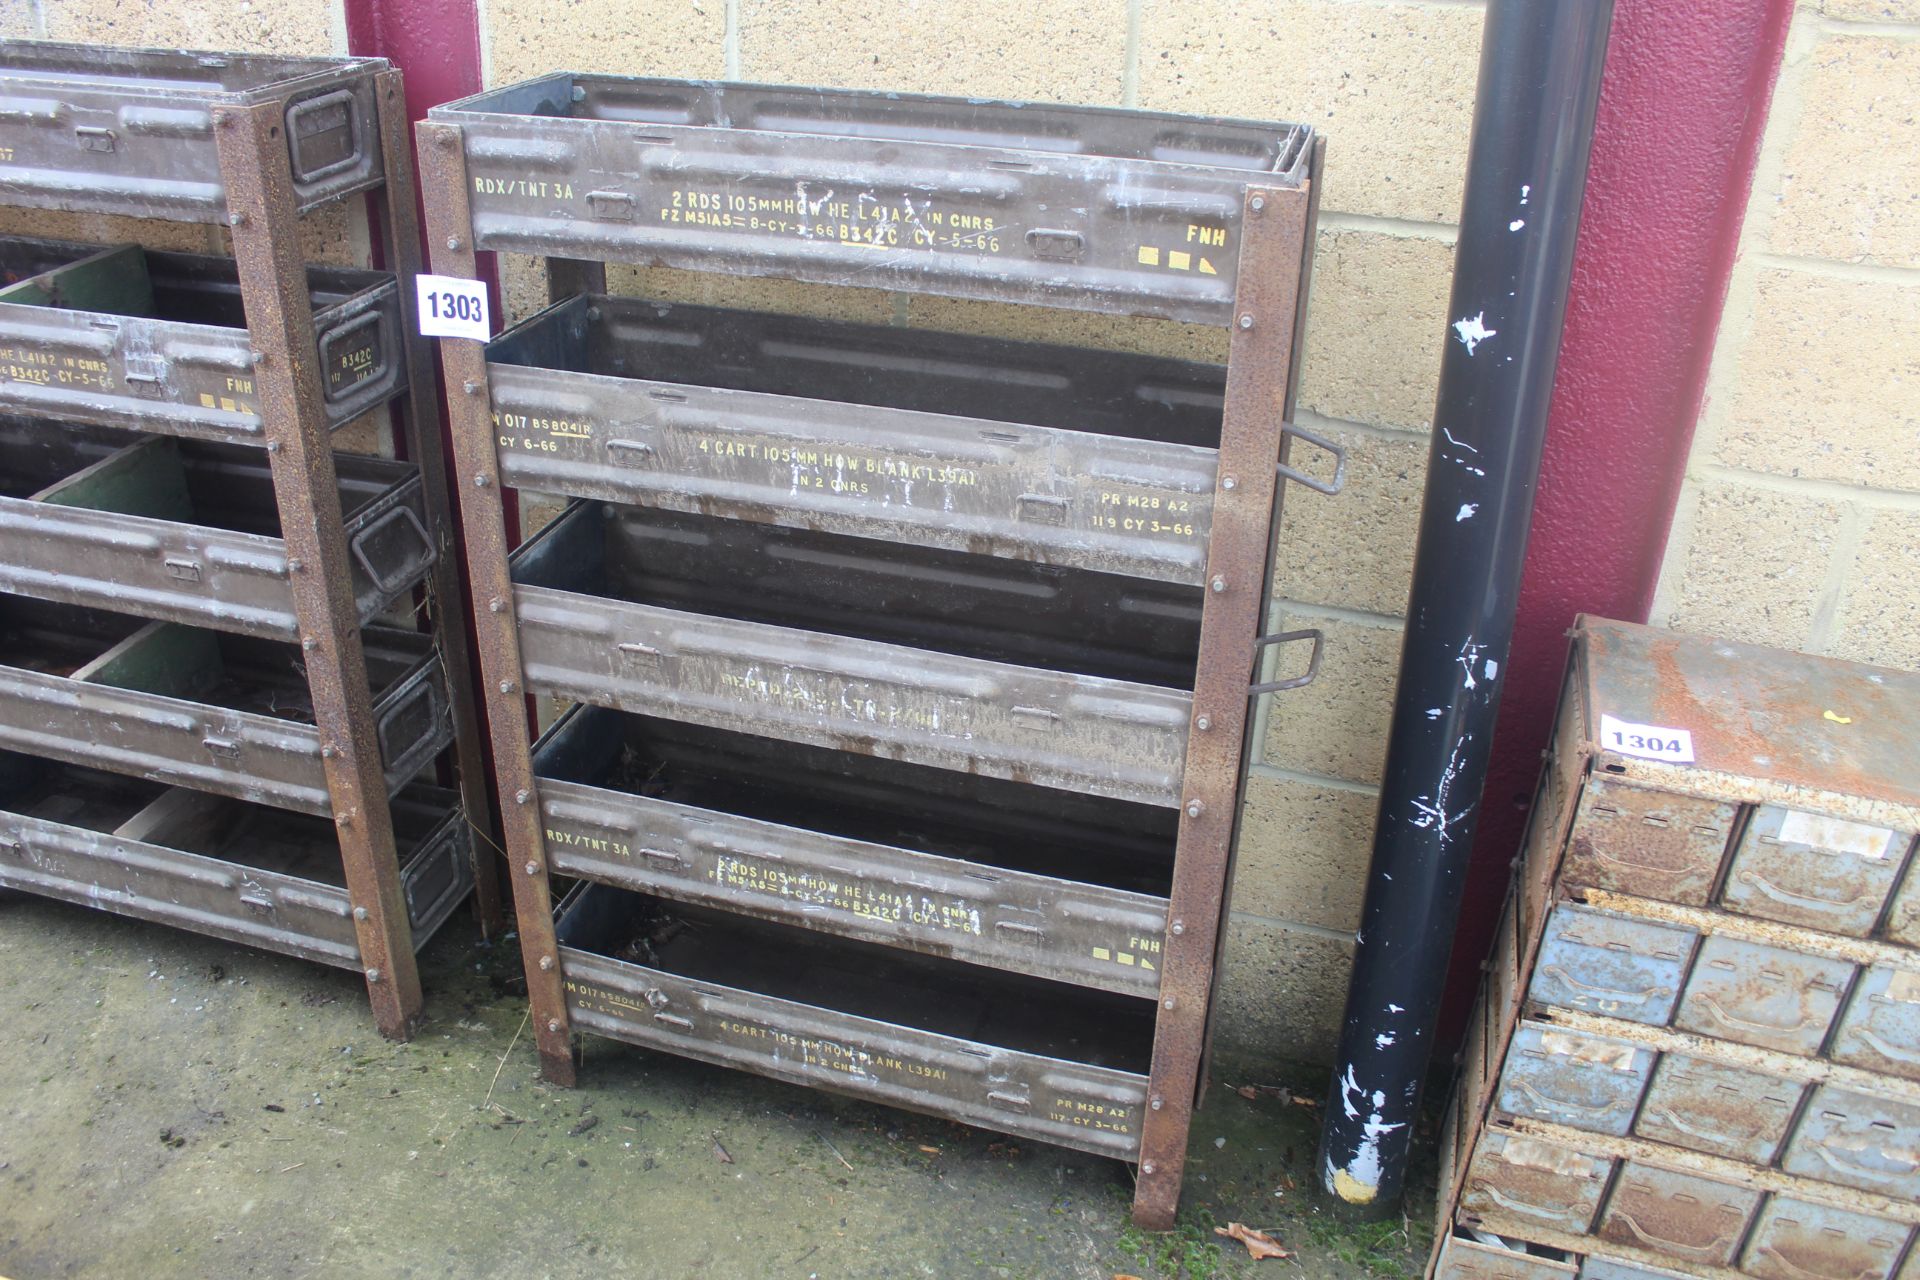 Workshop storage unit made from ammunition boxes.